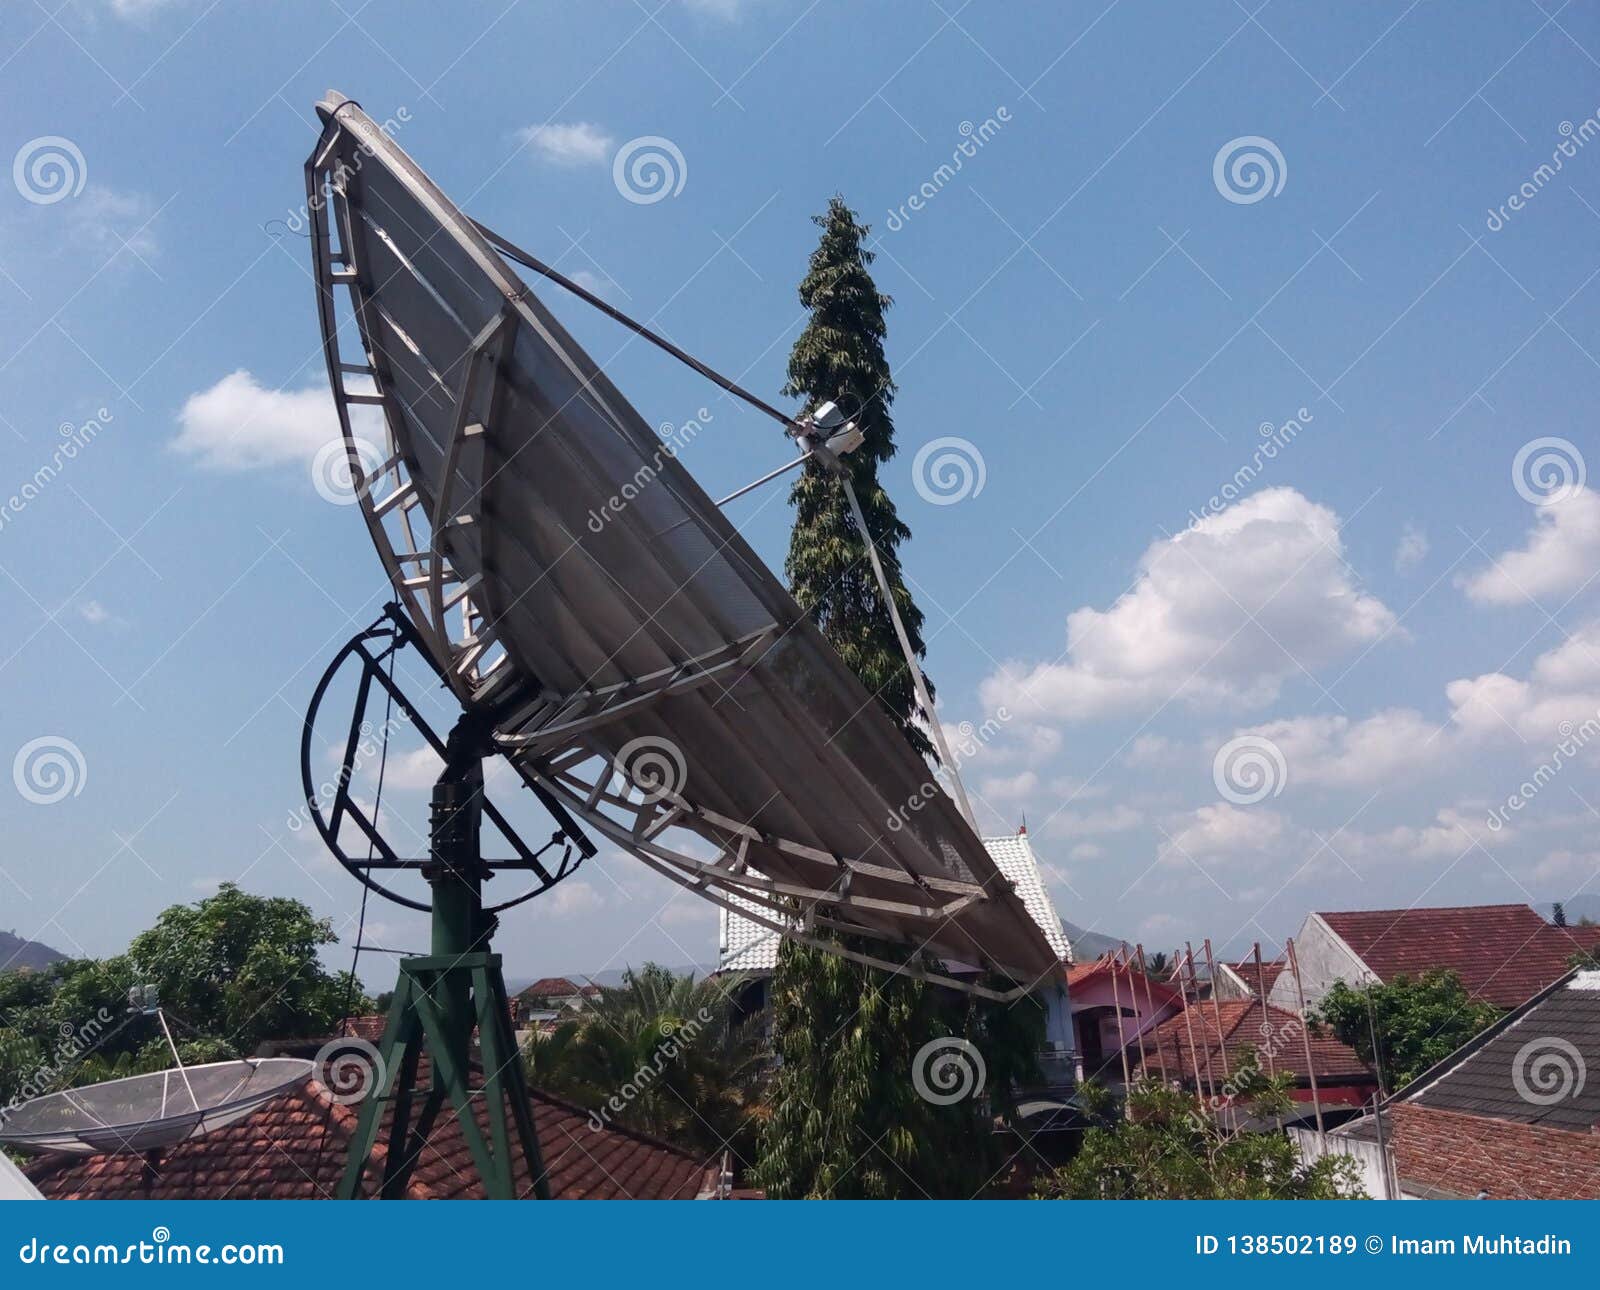 satellite dish antenna, electronic equipment to capture tv broadcasts via satellite